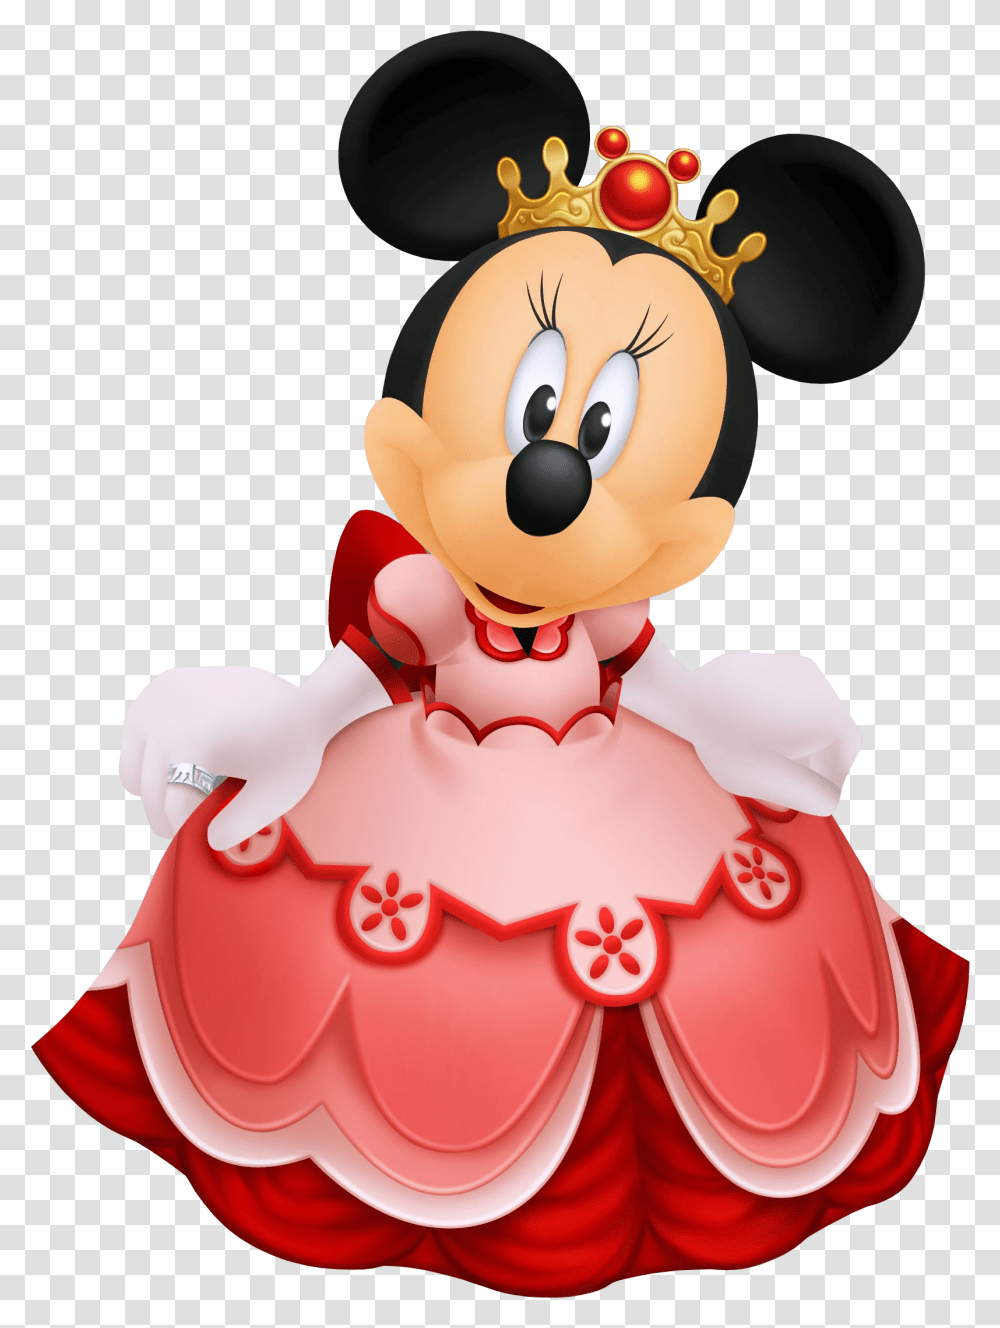 Minnie Mouse The Parody Wiki Fandom Kingdom Hearts Queen Minnie, Snowman, Cake, Dessert, Food Transparent Png